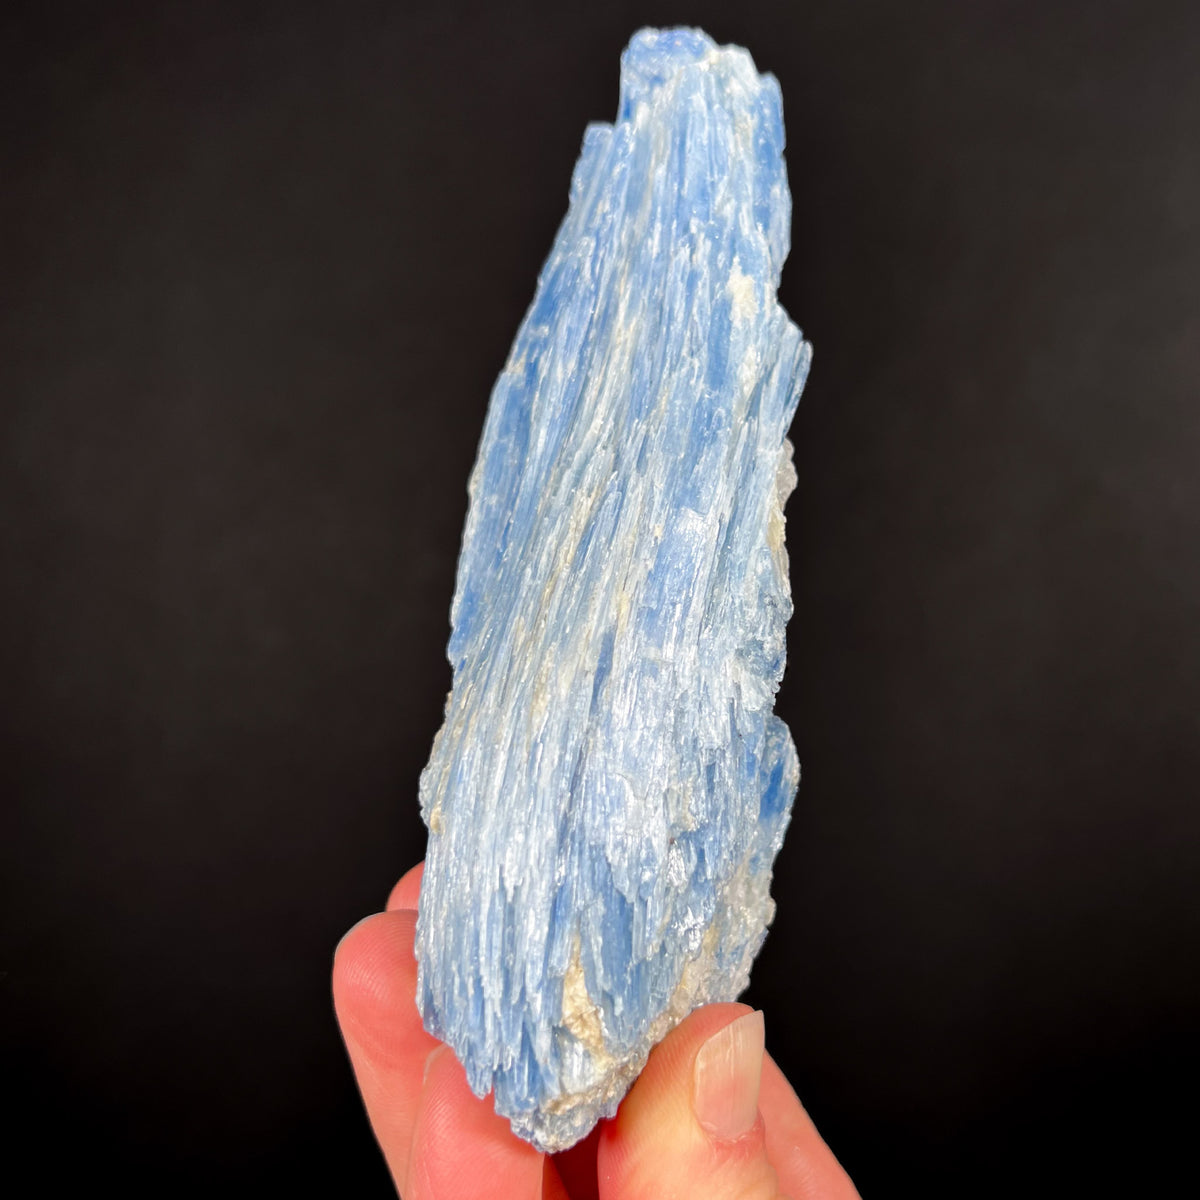 Blue Kyanite Crystal Specimen